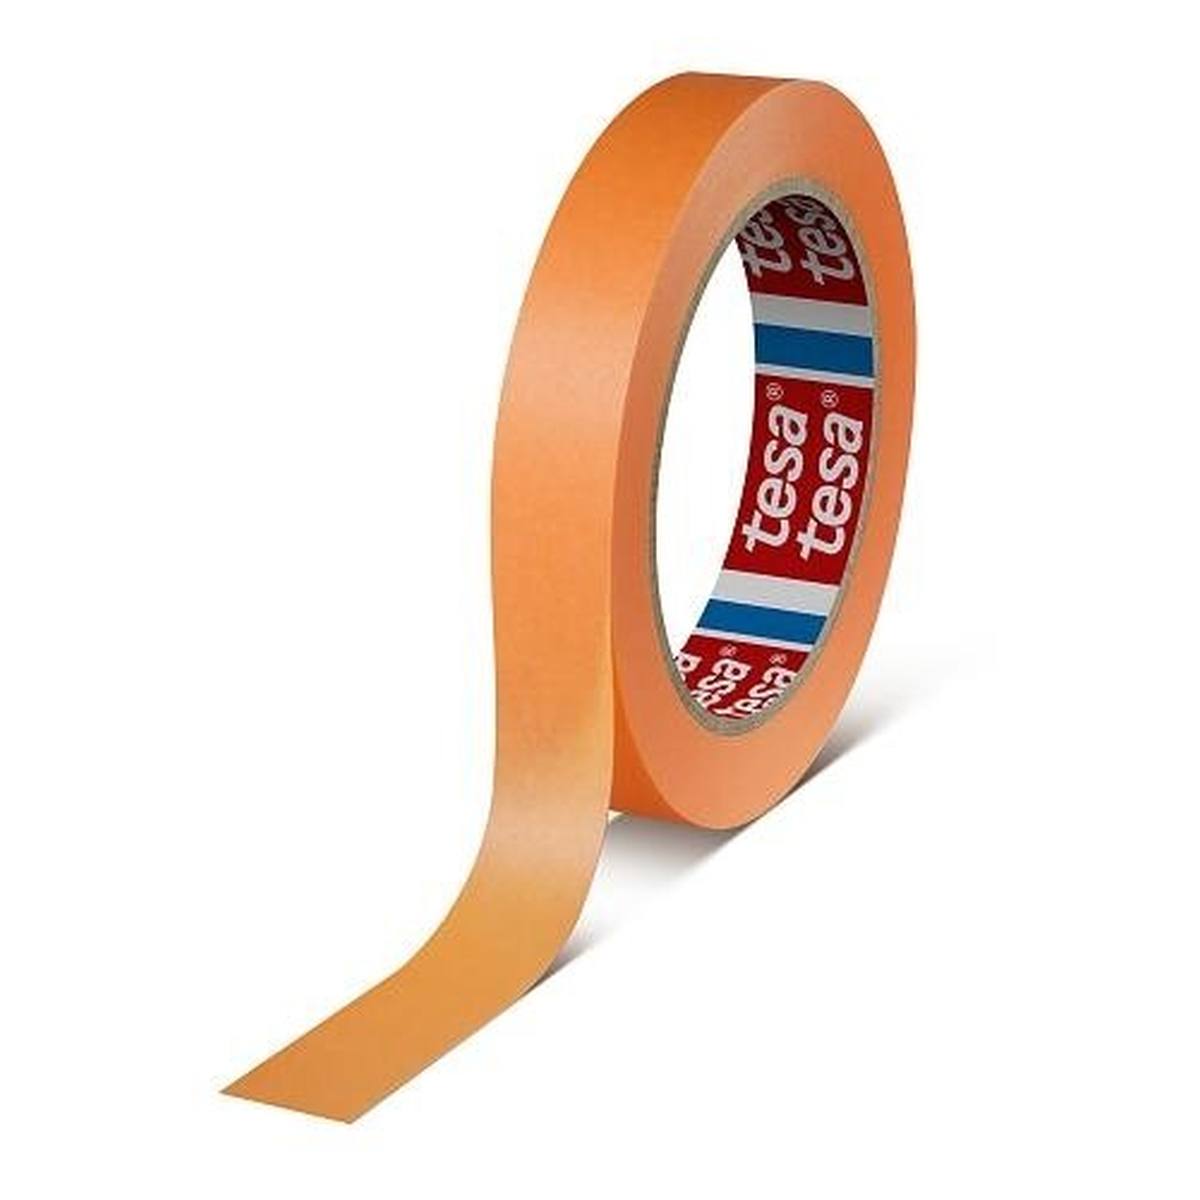 Tesakrepp 4342 washi tape crepé de precisión 19mmx50m naranja